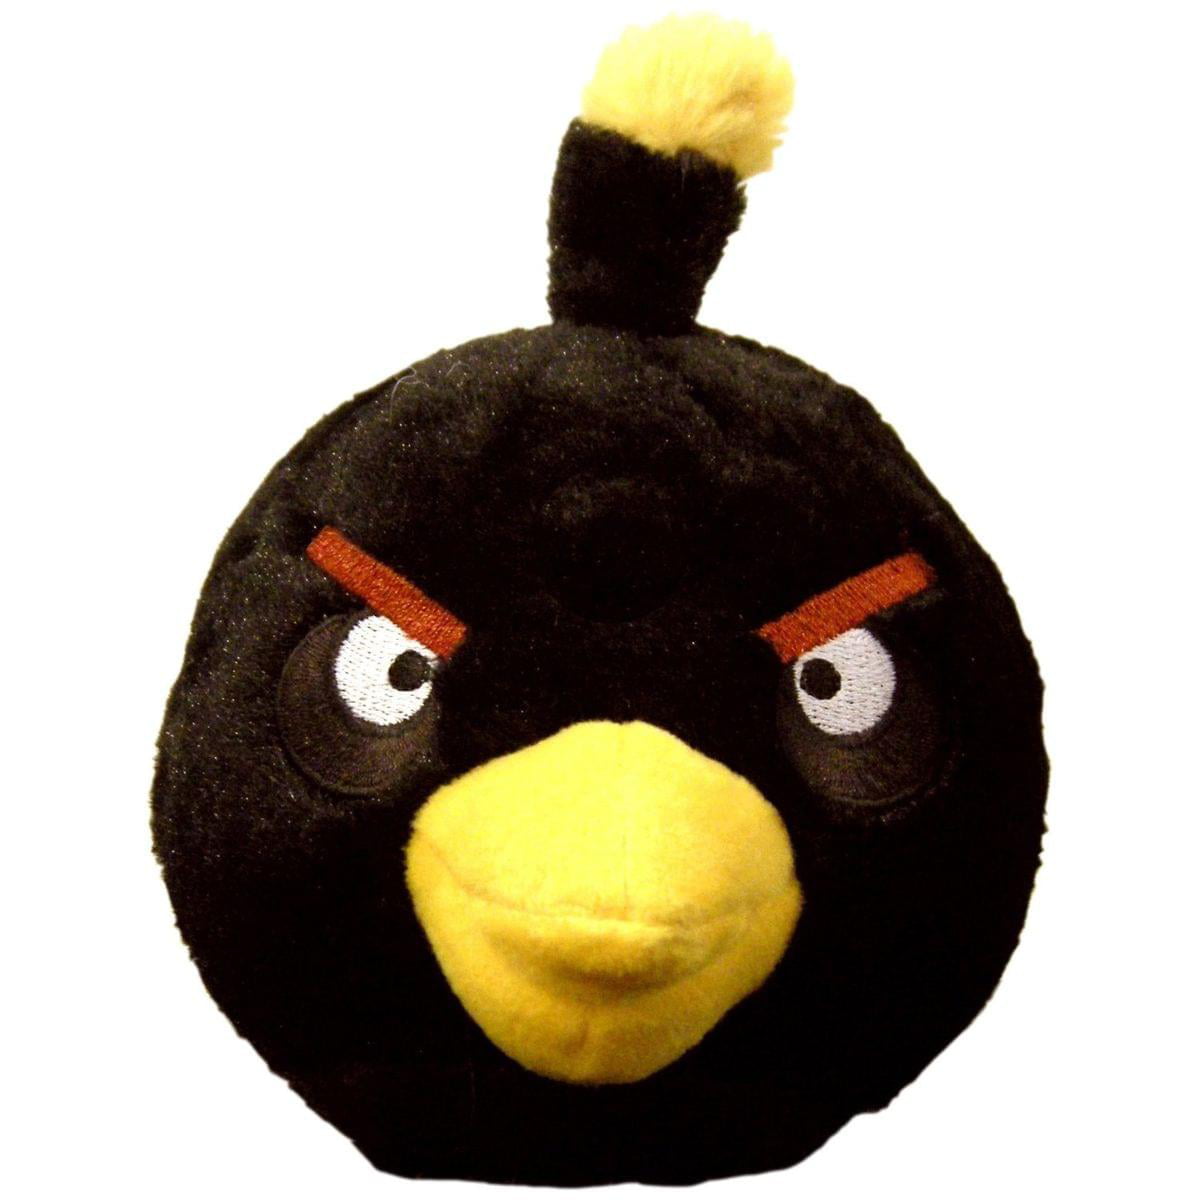 Angry Birds 8" Plush Red Bird  8"H x 7"W No Sound 